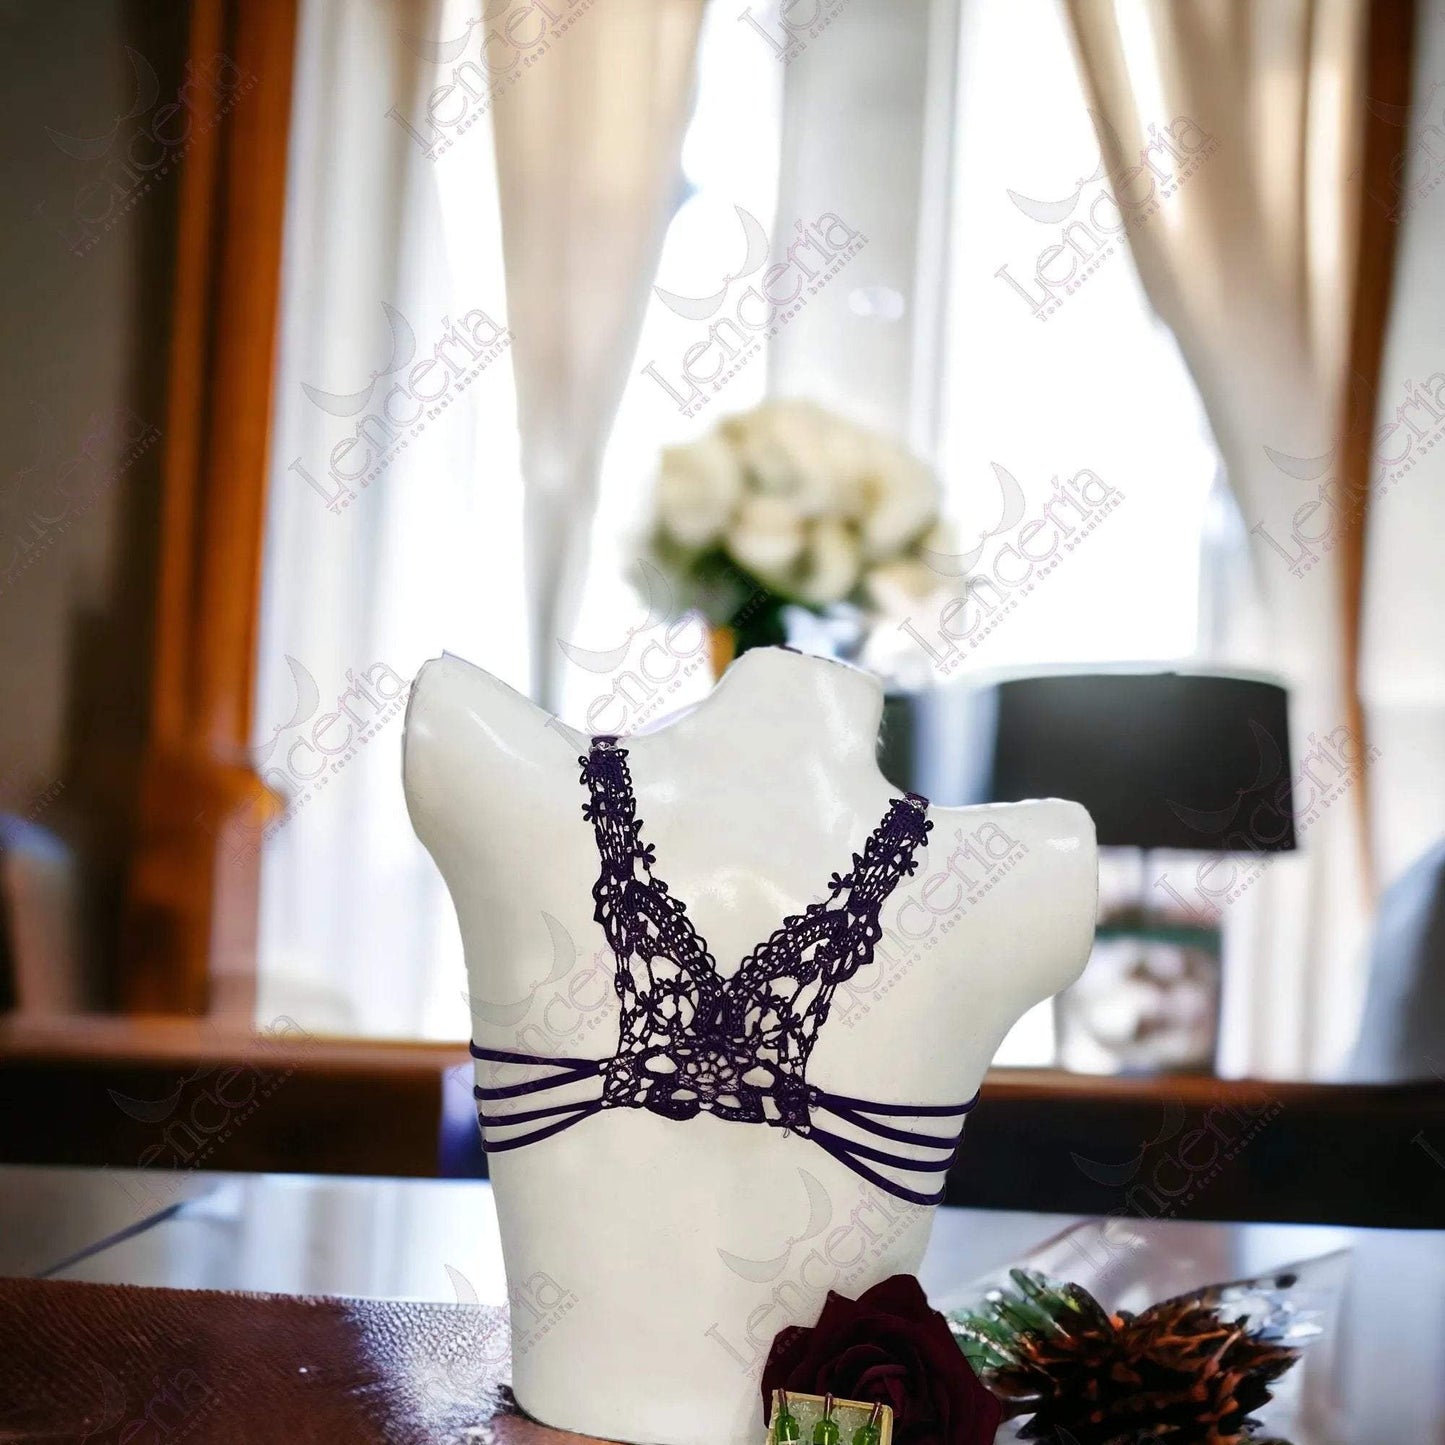 Mariposa lingerie set